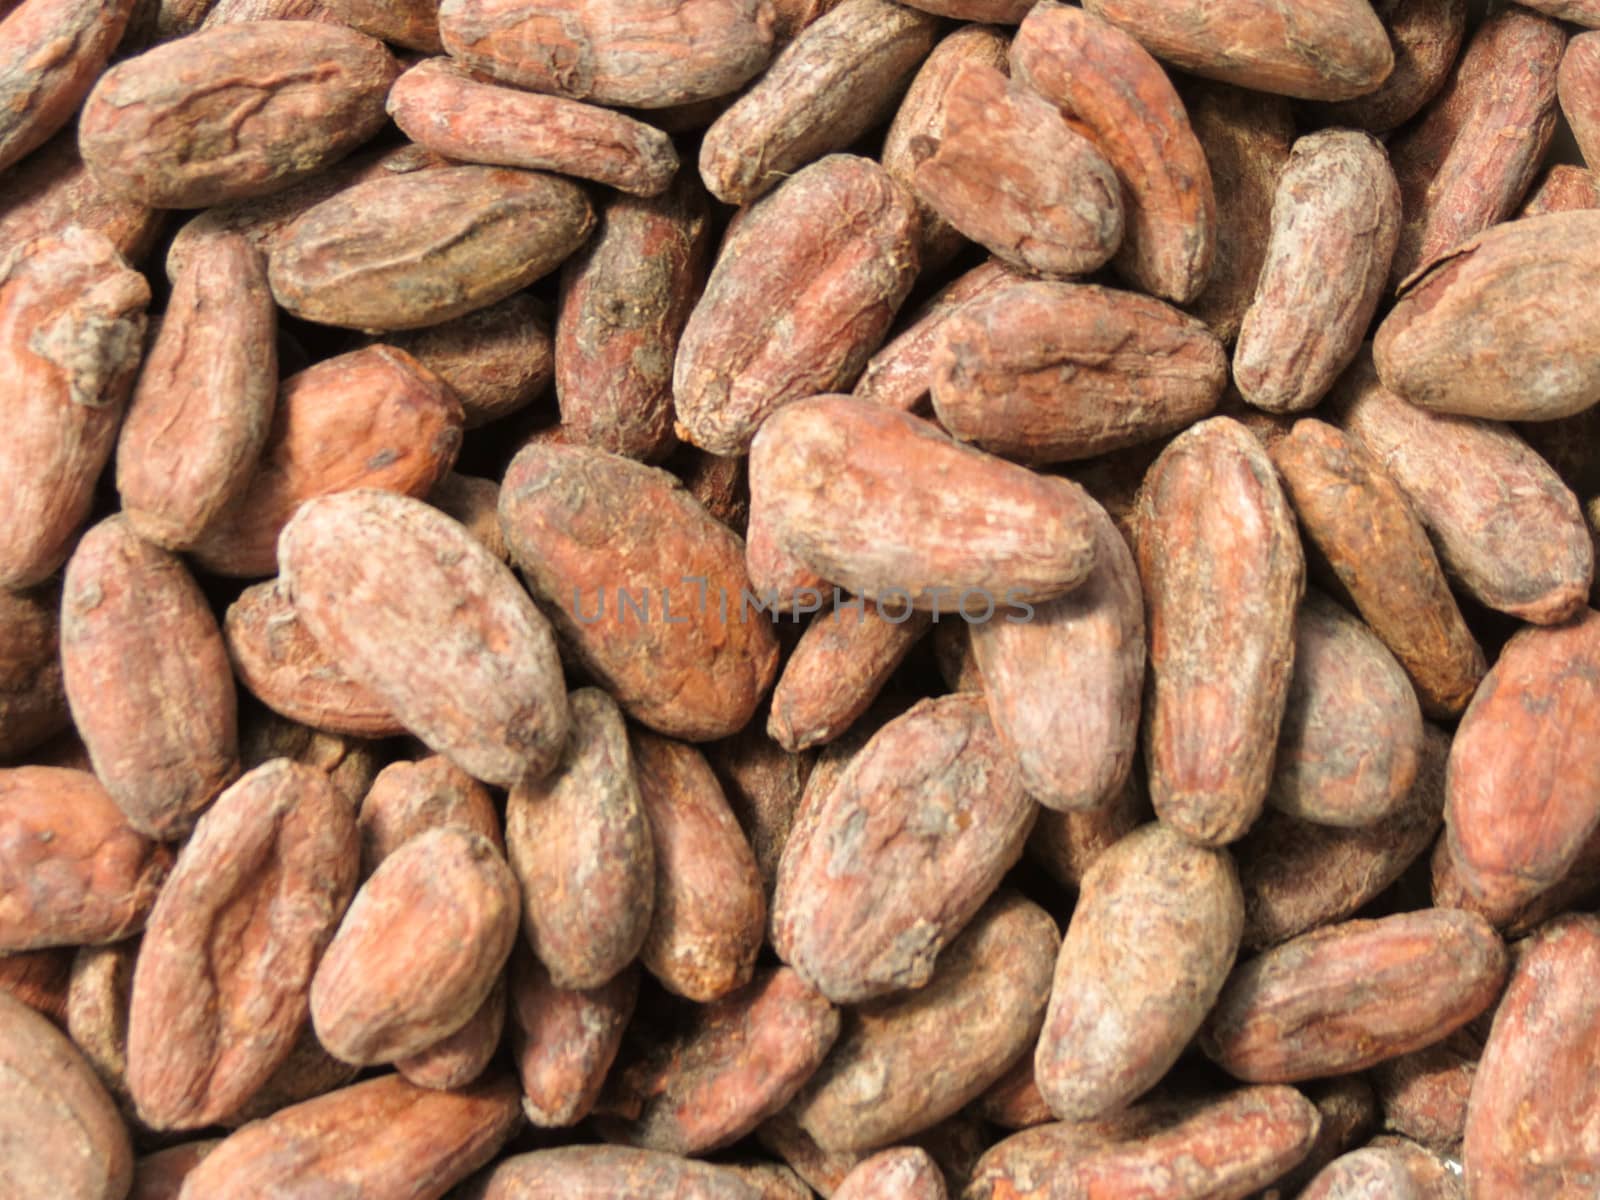 cocoa beans (theobroma cacao) from Madagascar